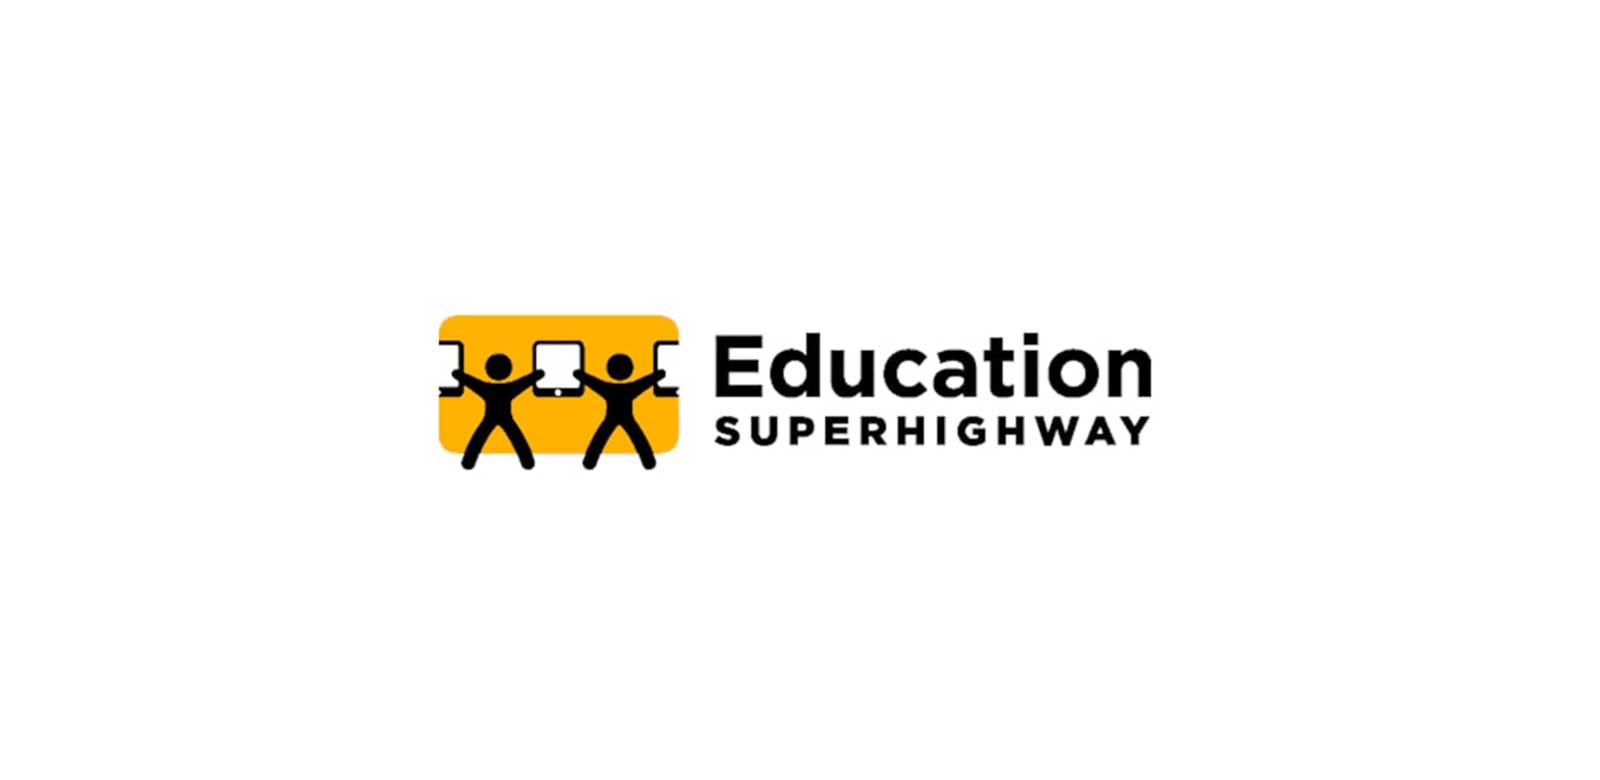 EducationSuperHighway-Video